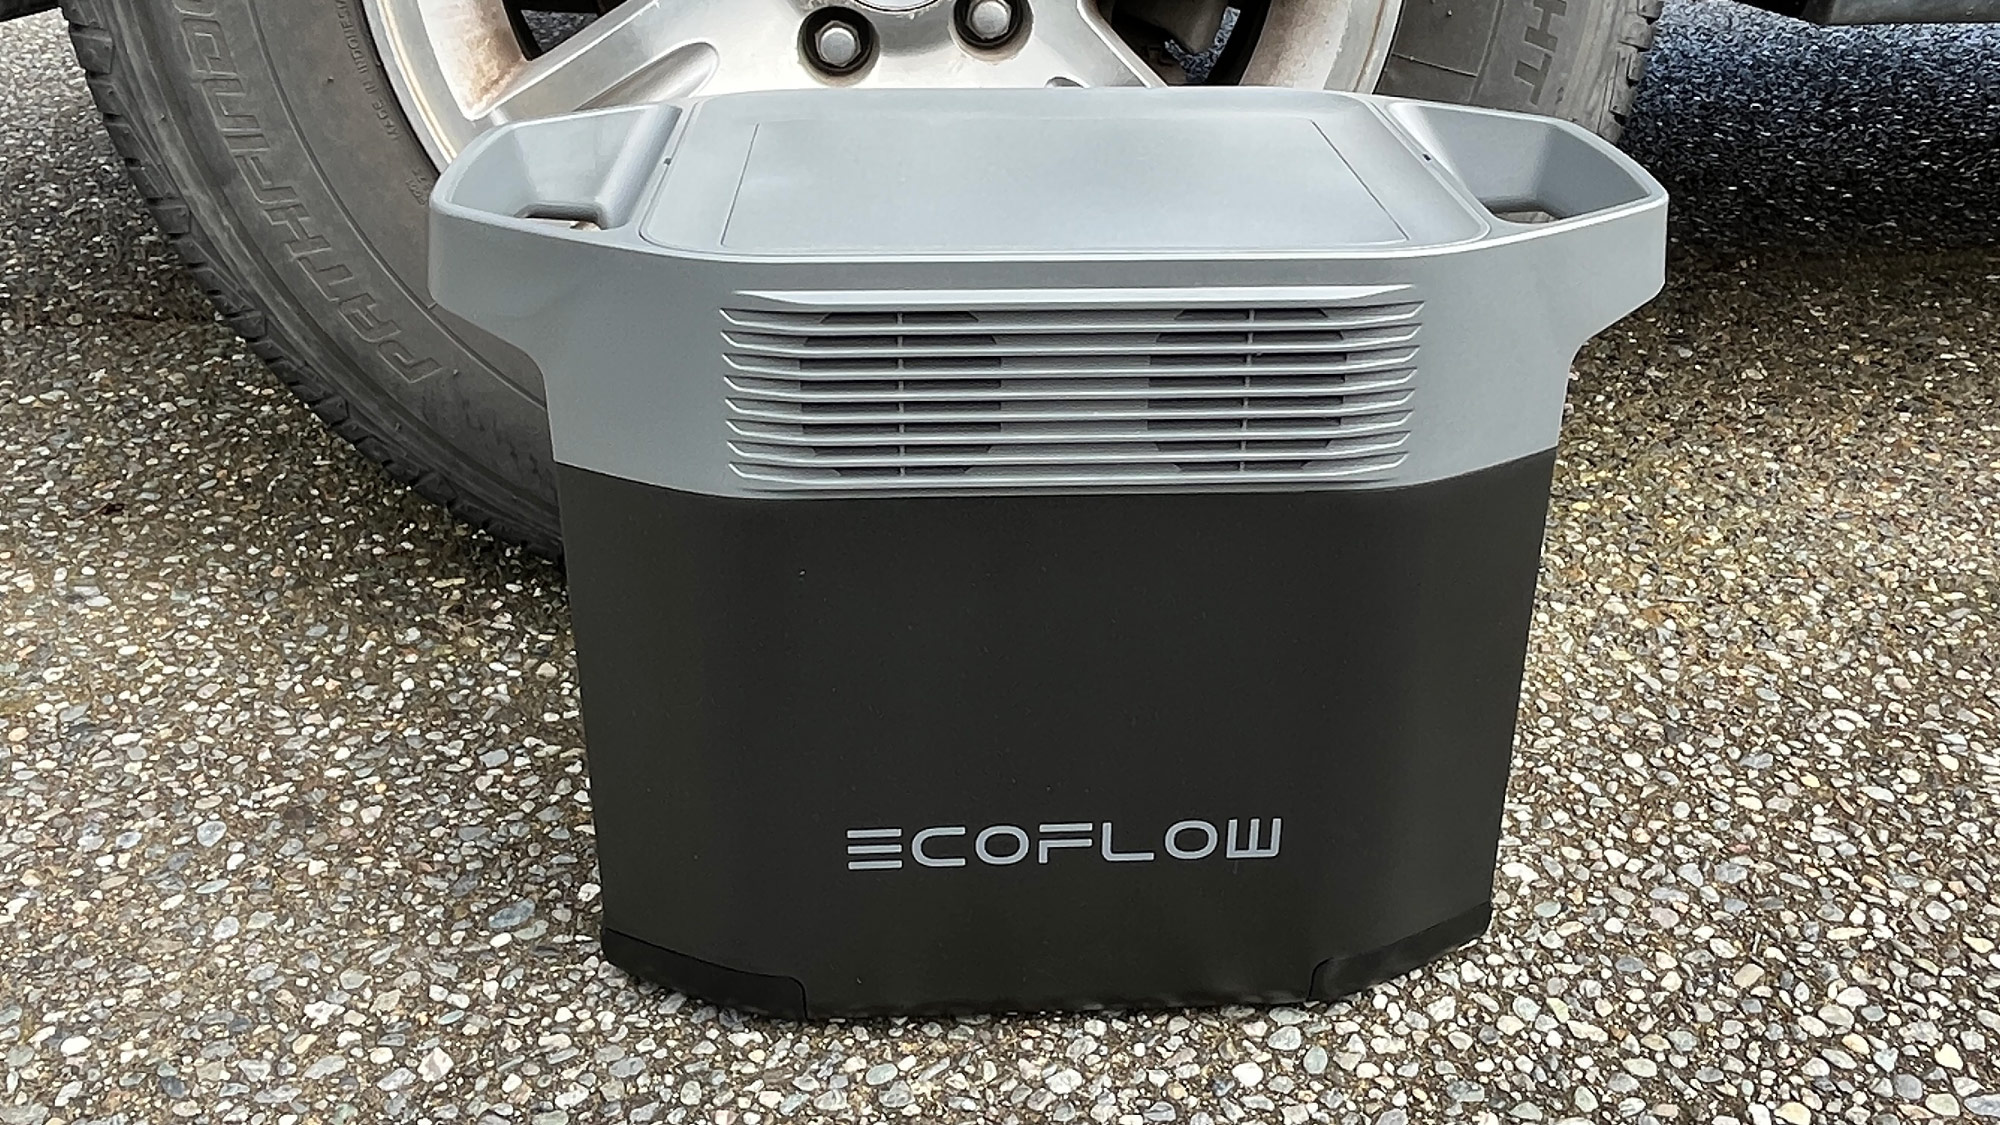 EcoFlow Delta 2 generator sitting on the ground near a truck tire